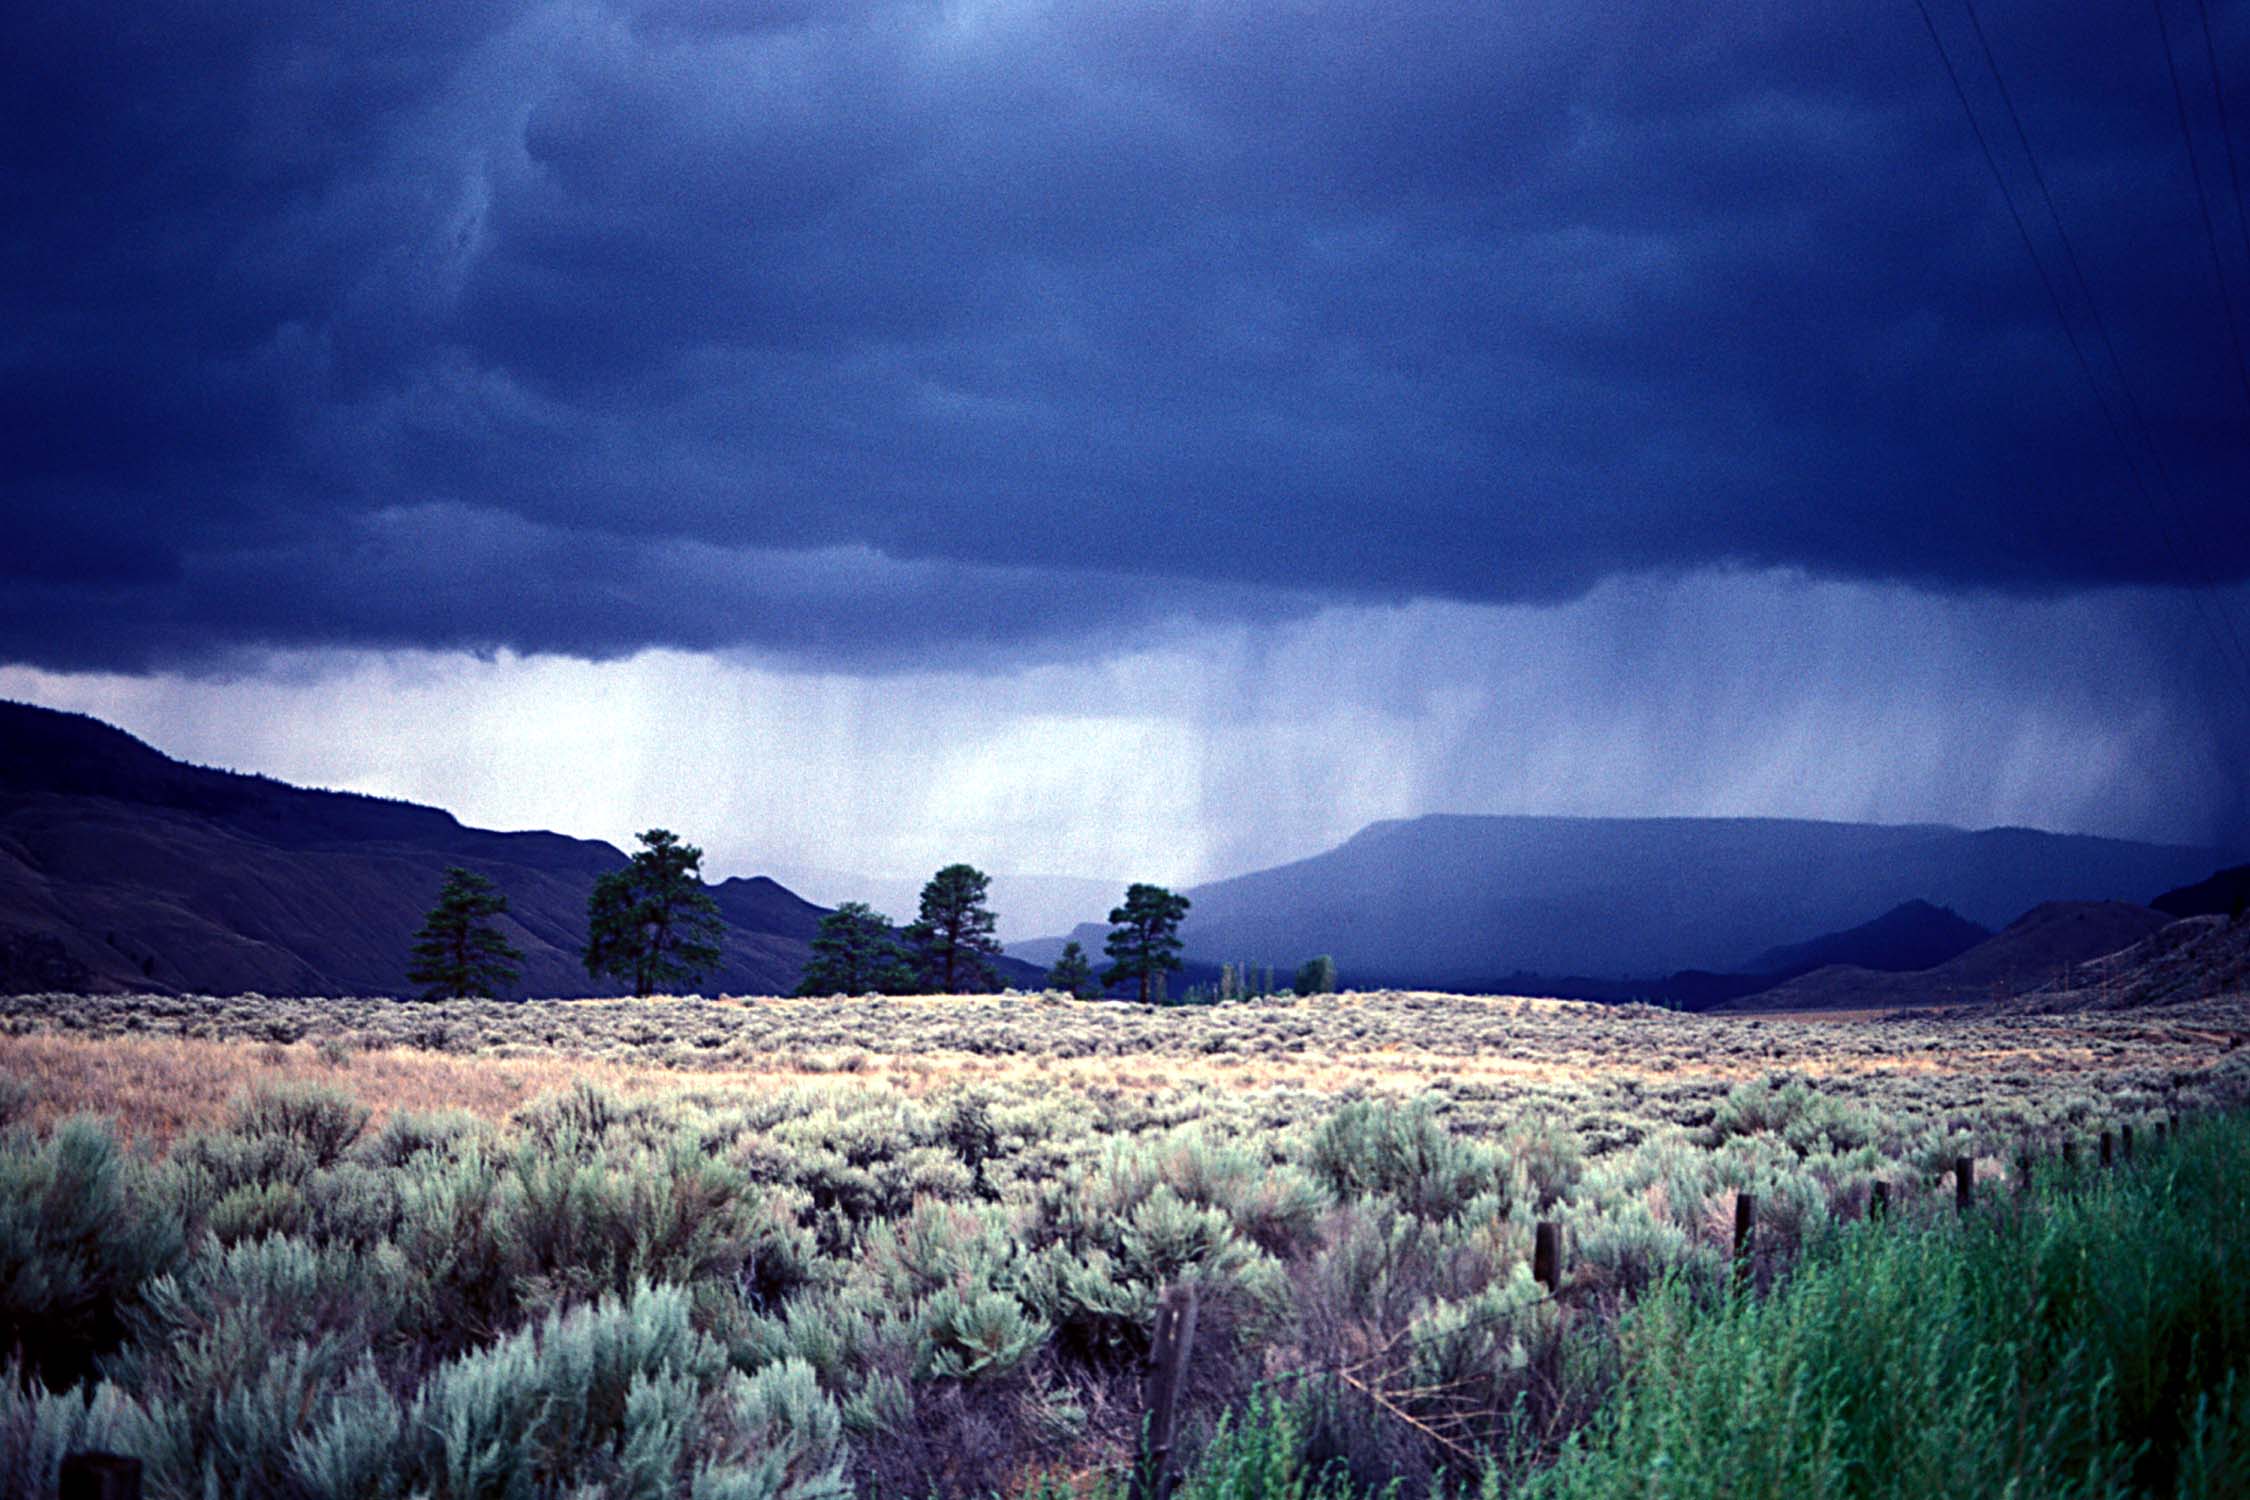 A dark raincloud over a valley